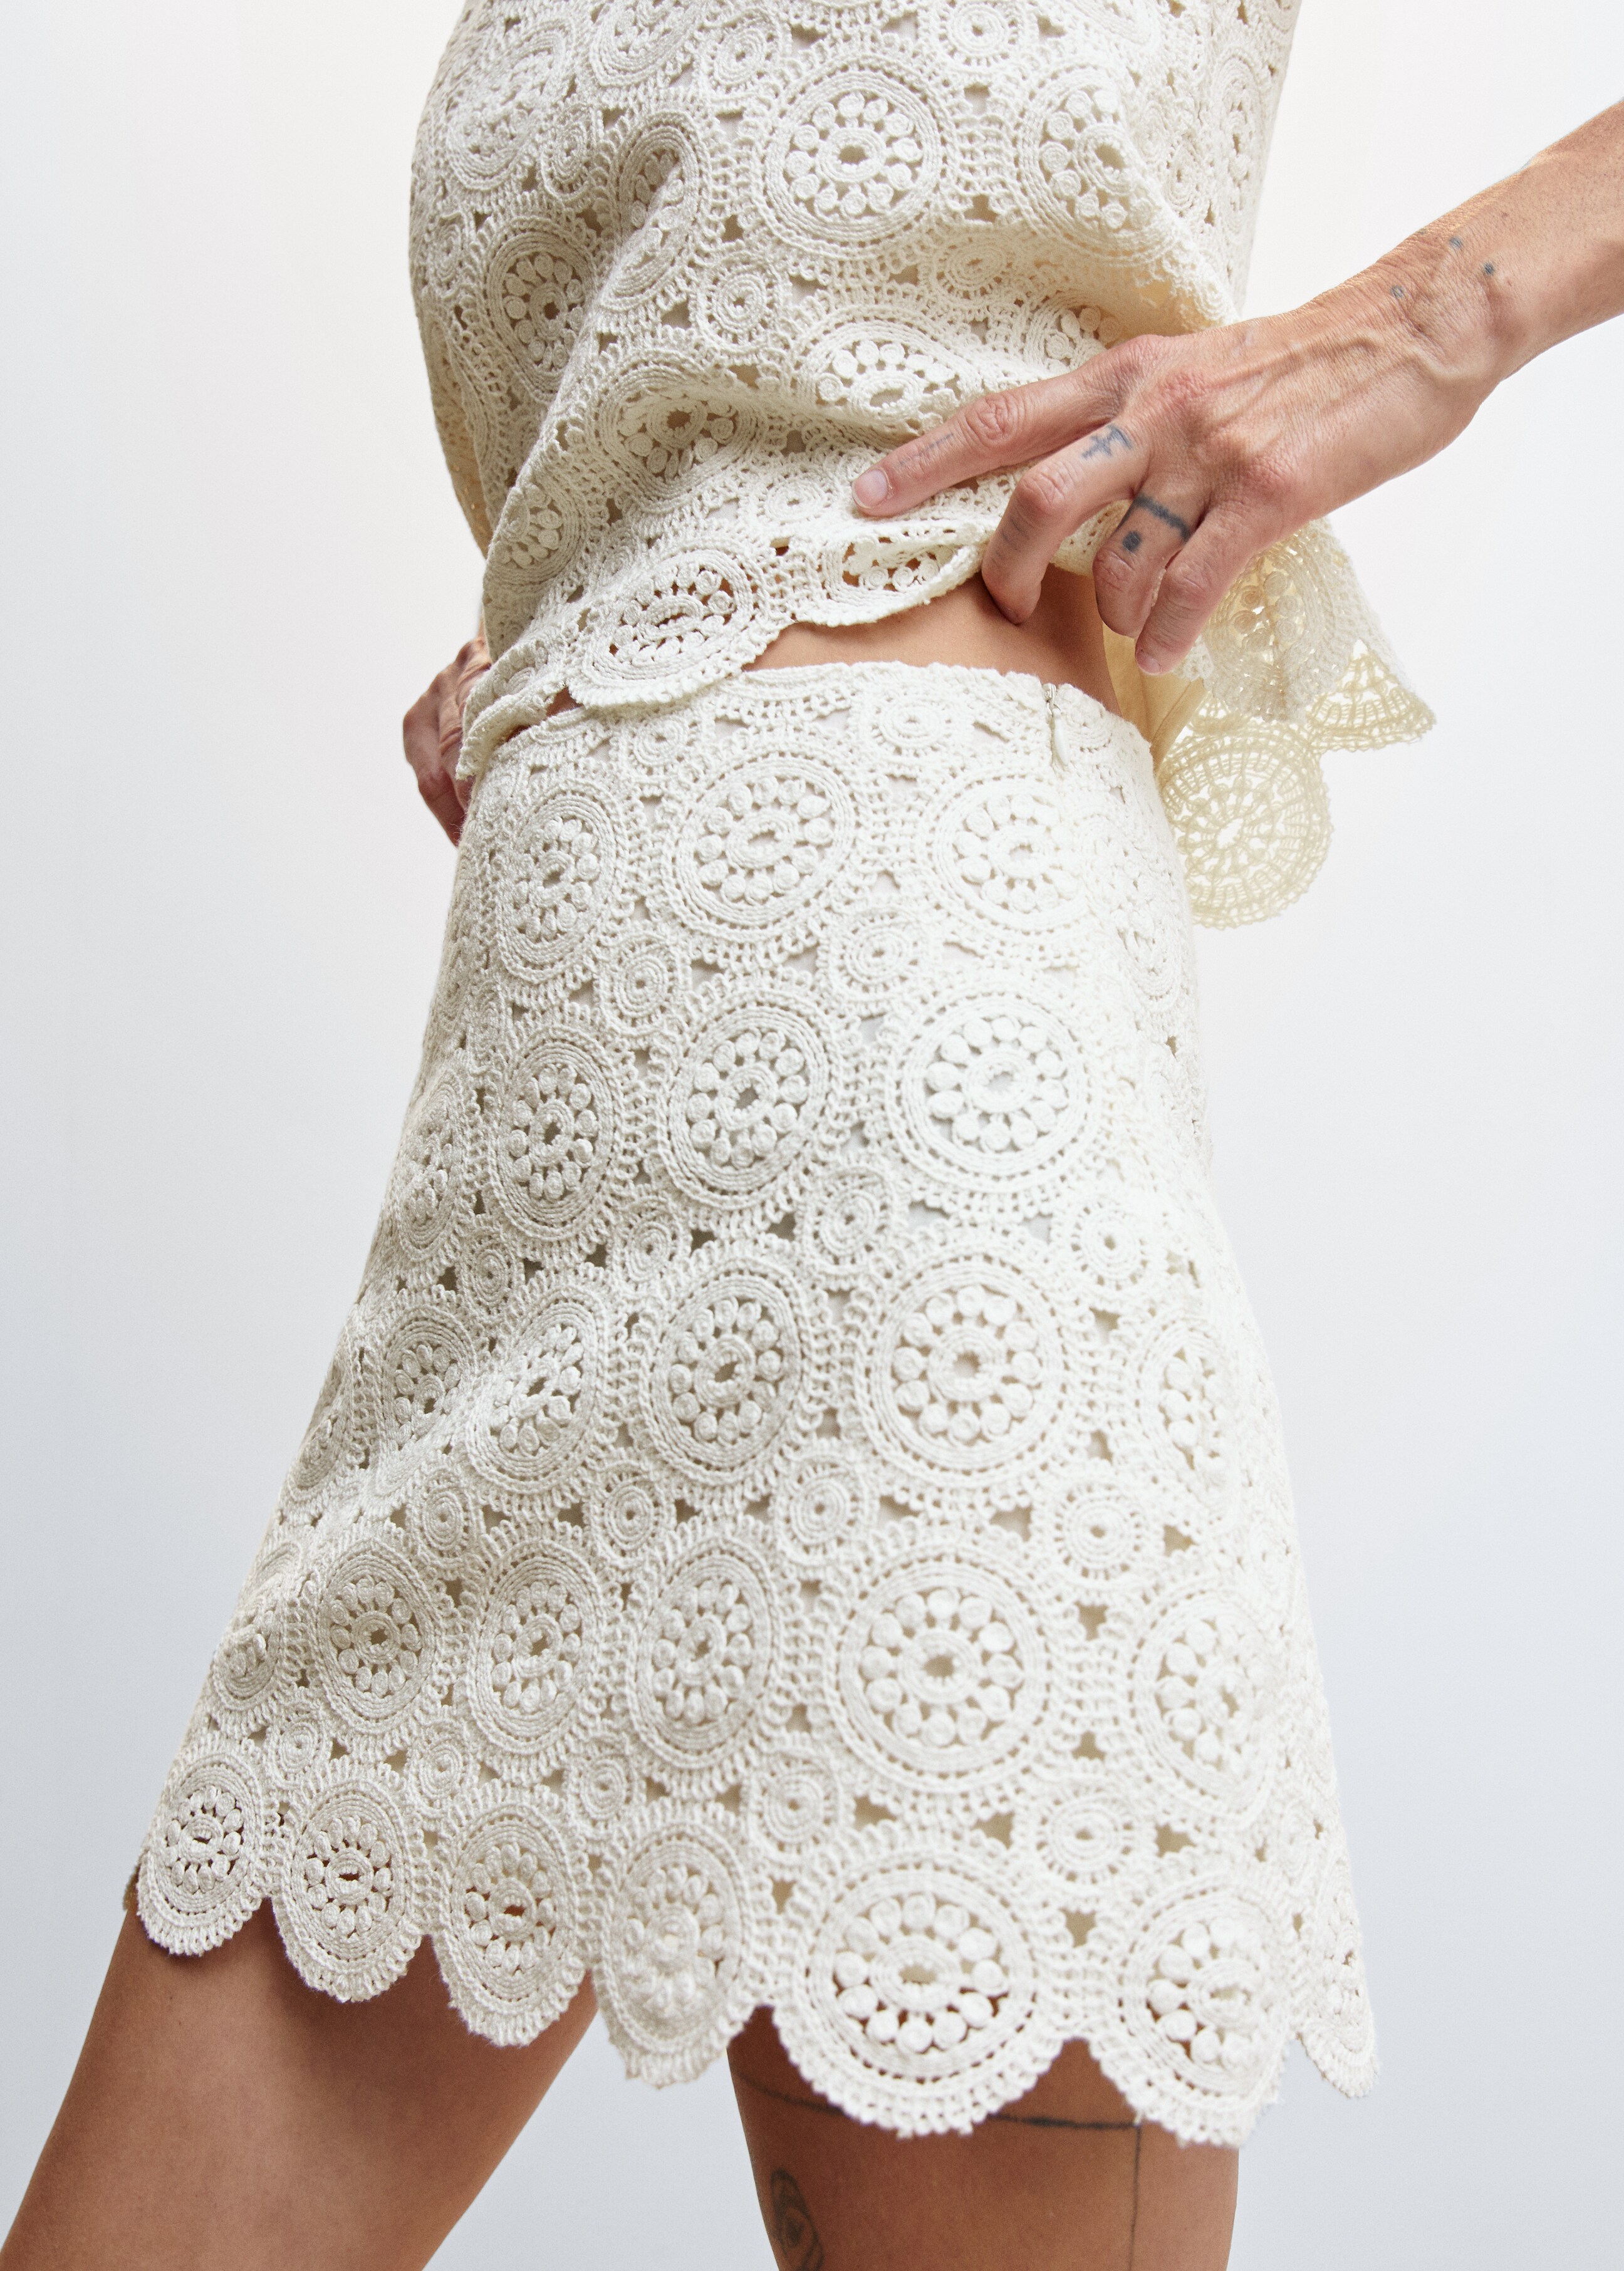 Crochet skirt - Details of the article 6